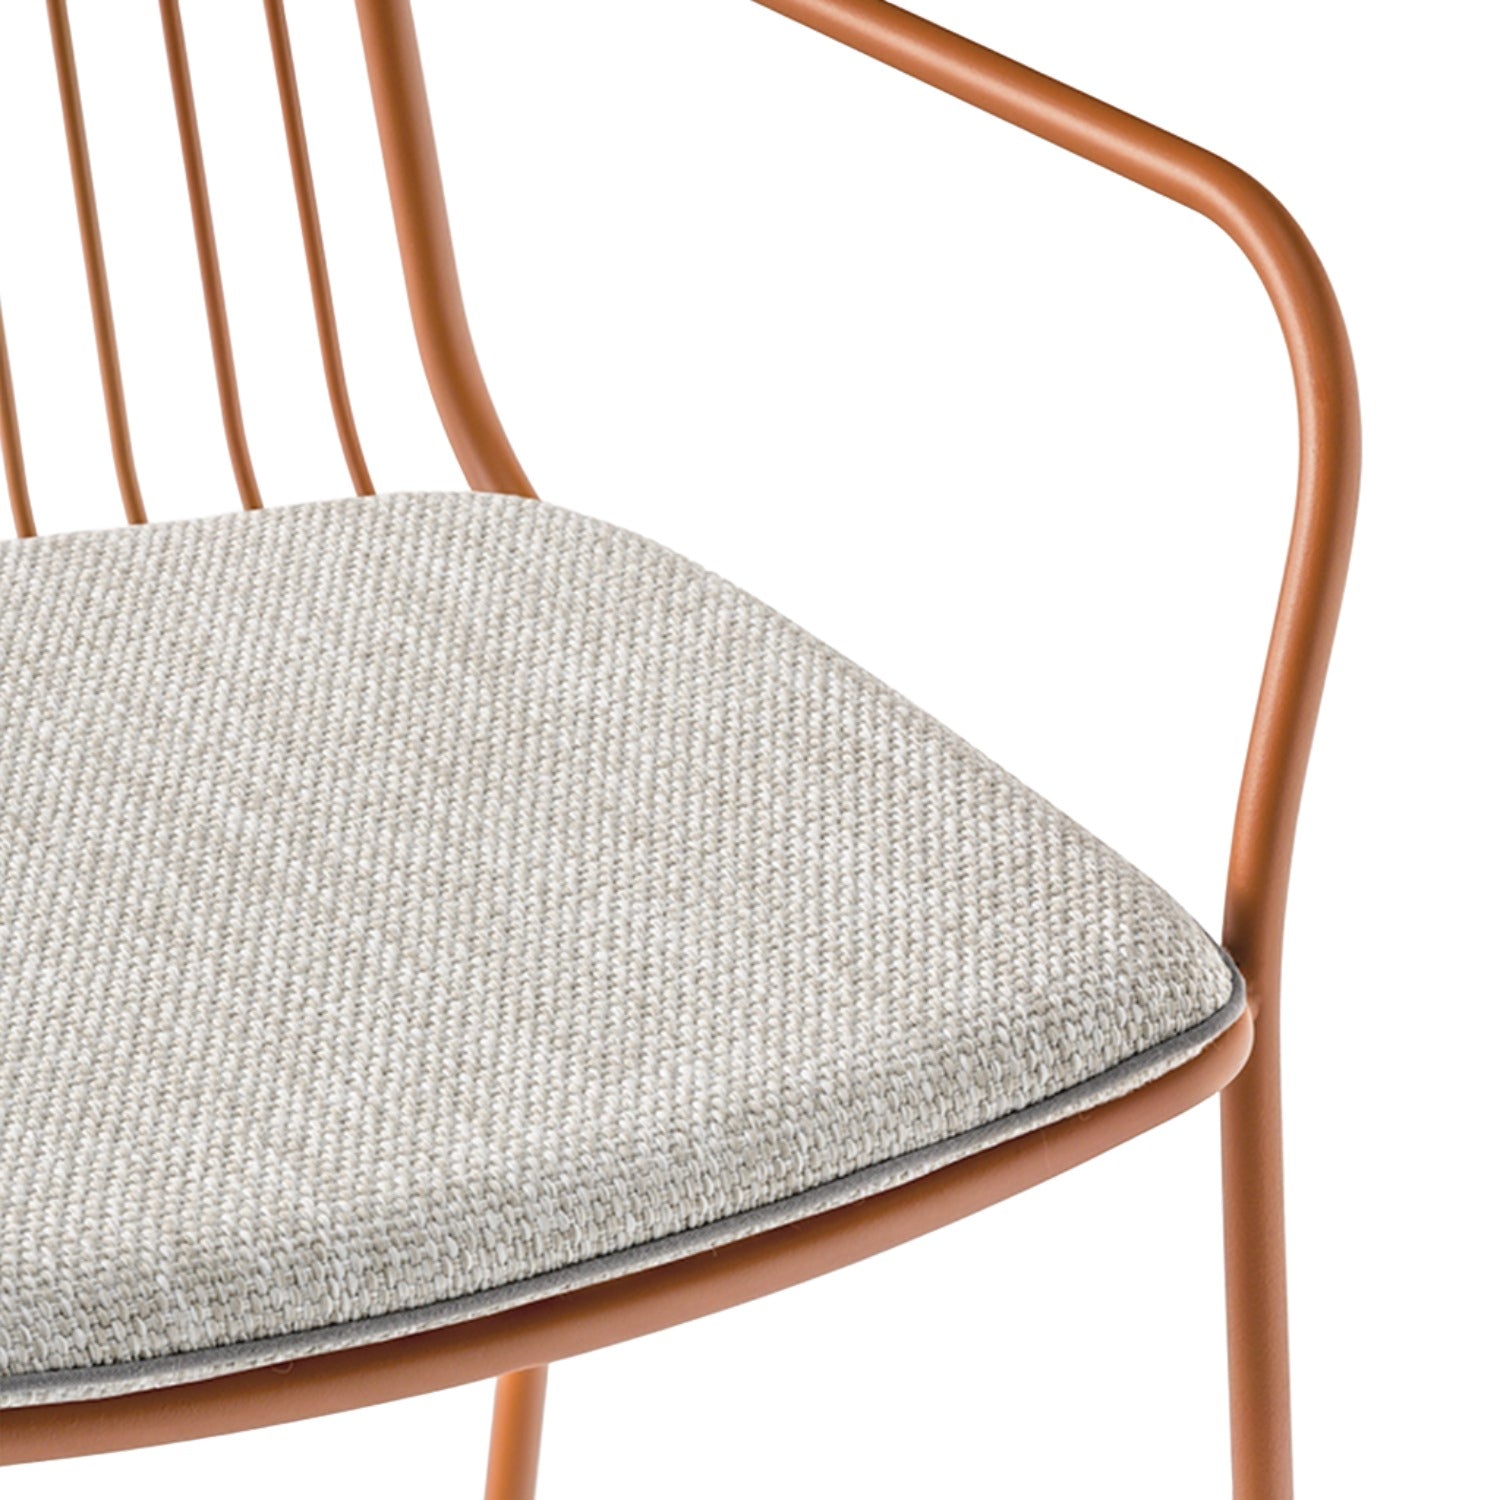 Pedrali detail image of Nolita 3650-3 seat cushion on terracotta Nolita 3656 chair